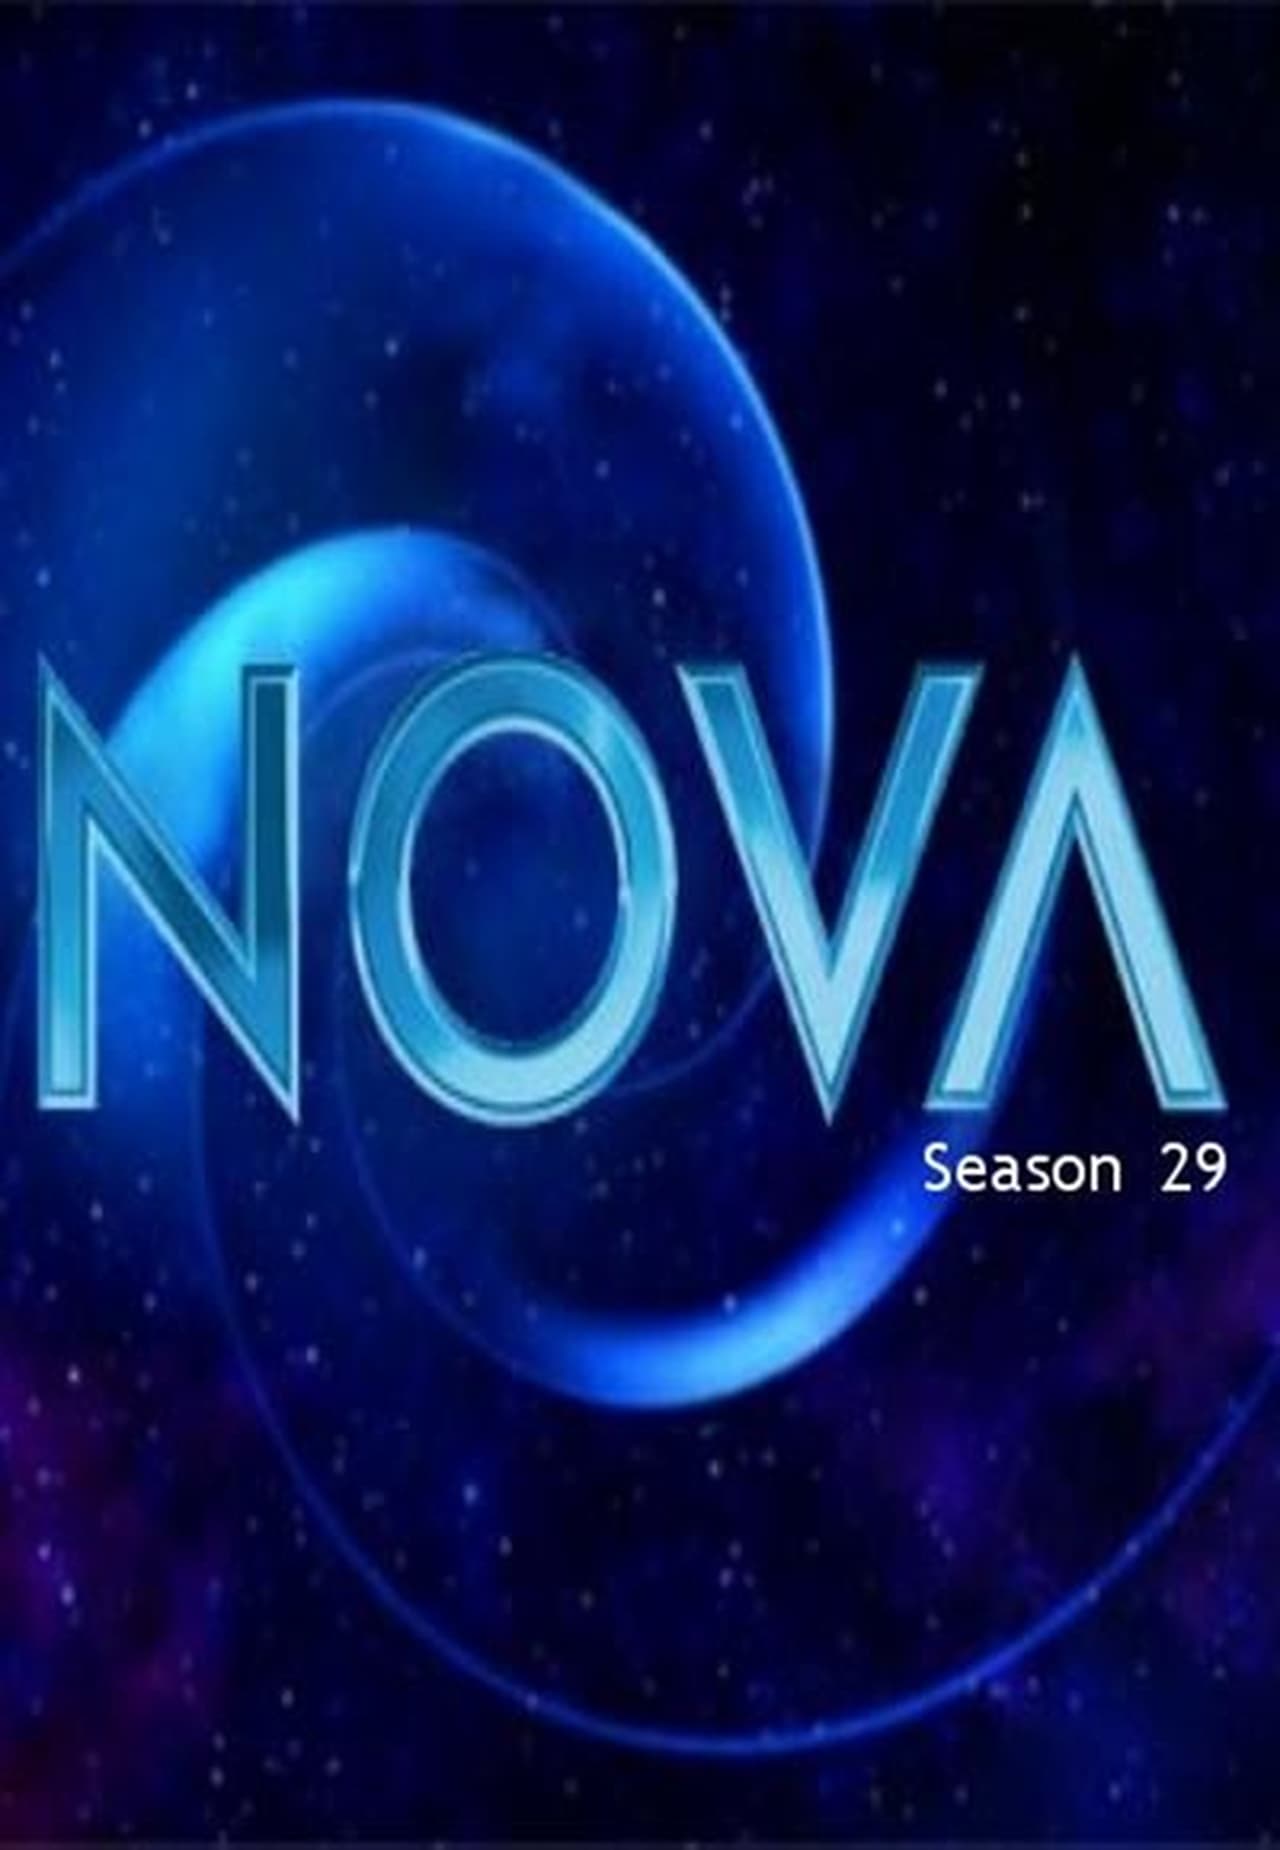 NOVA Season 29